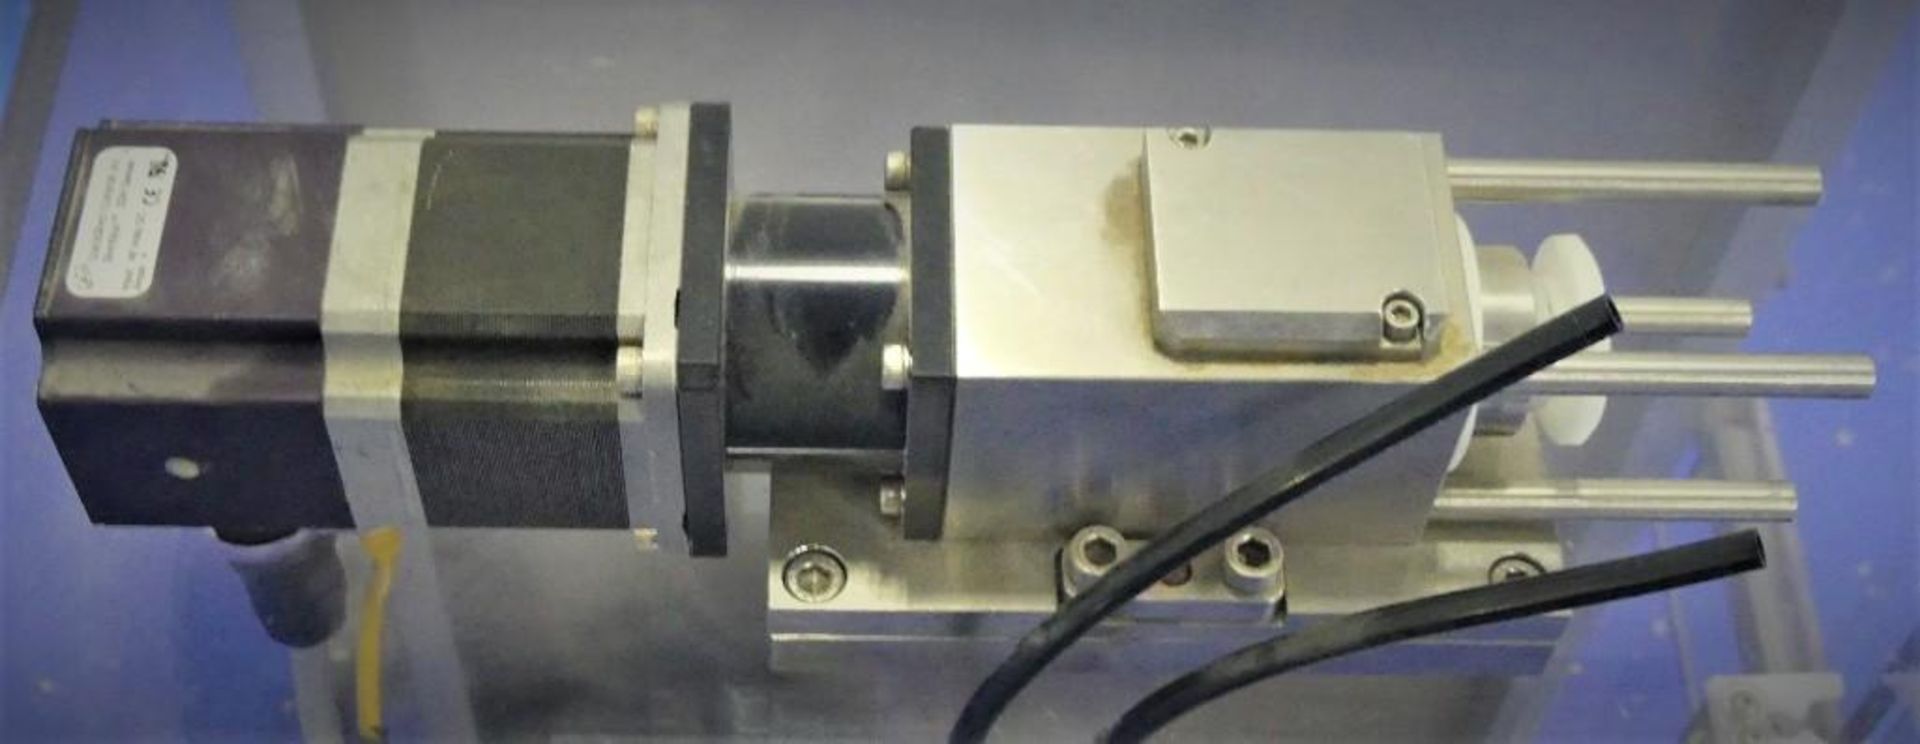 Hibar Servo Dispensing System - Image 5 of 8